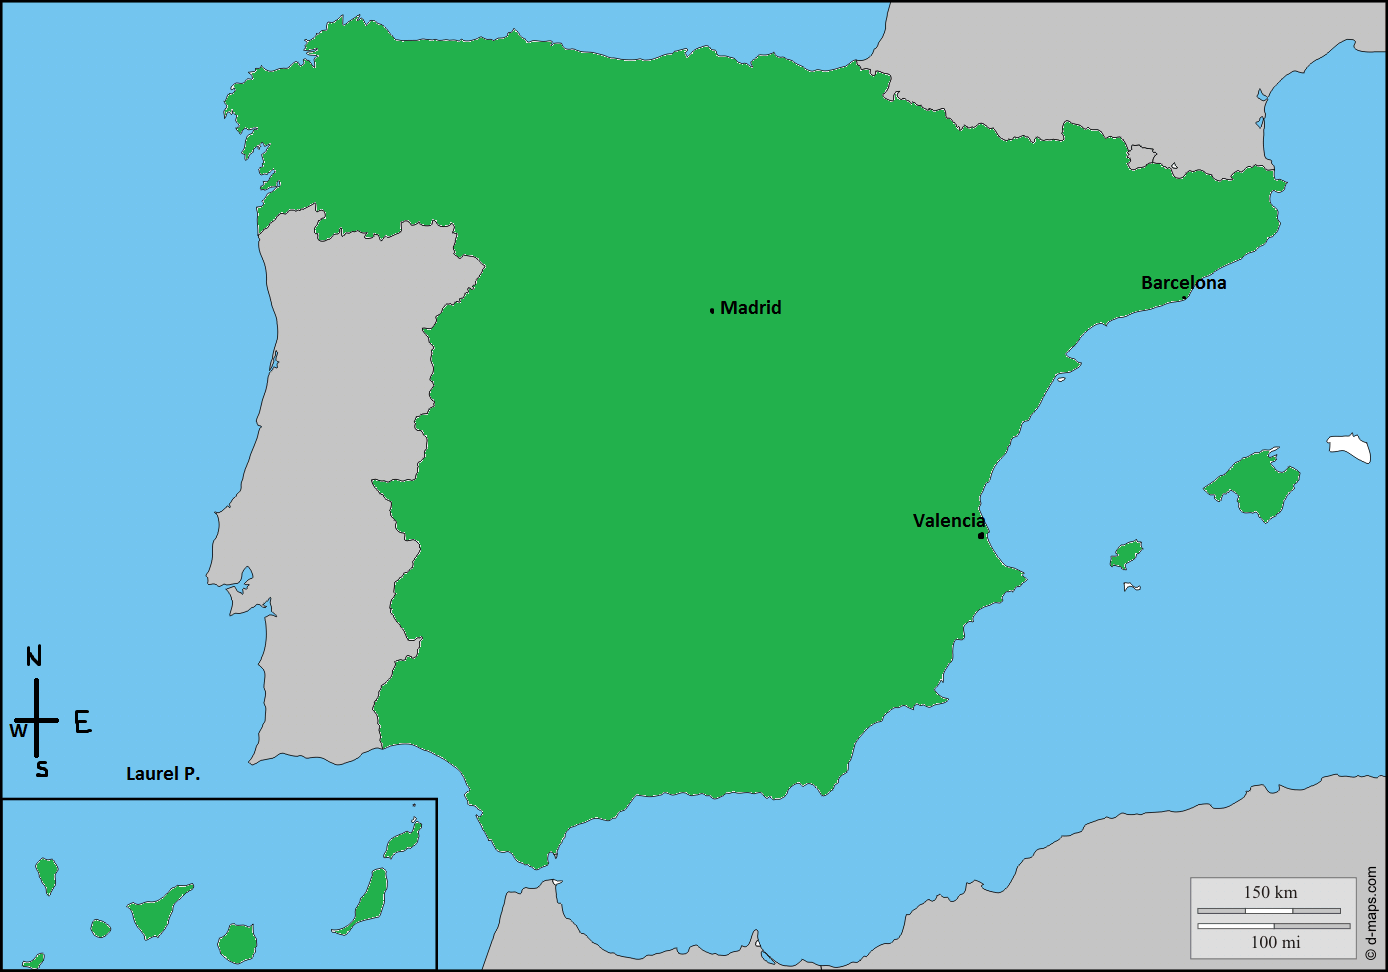 Spain - Exploring Southern Europe